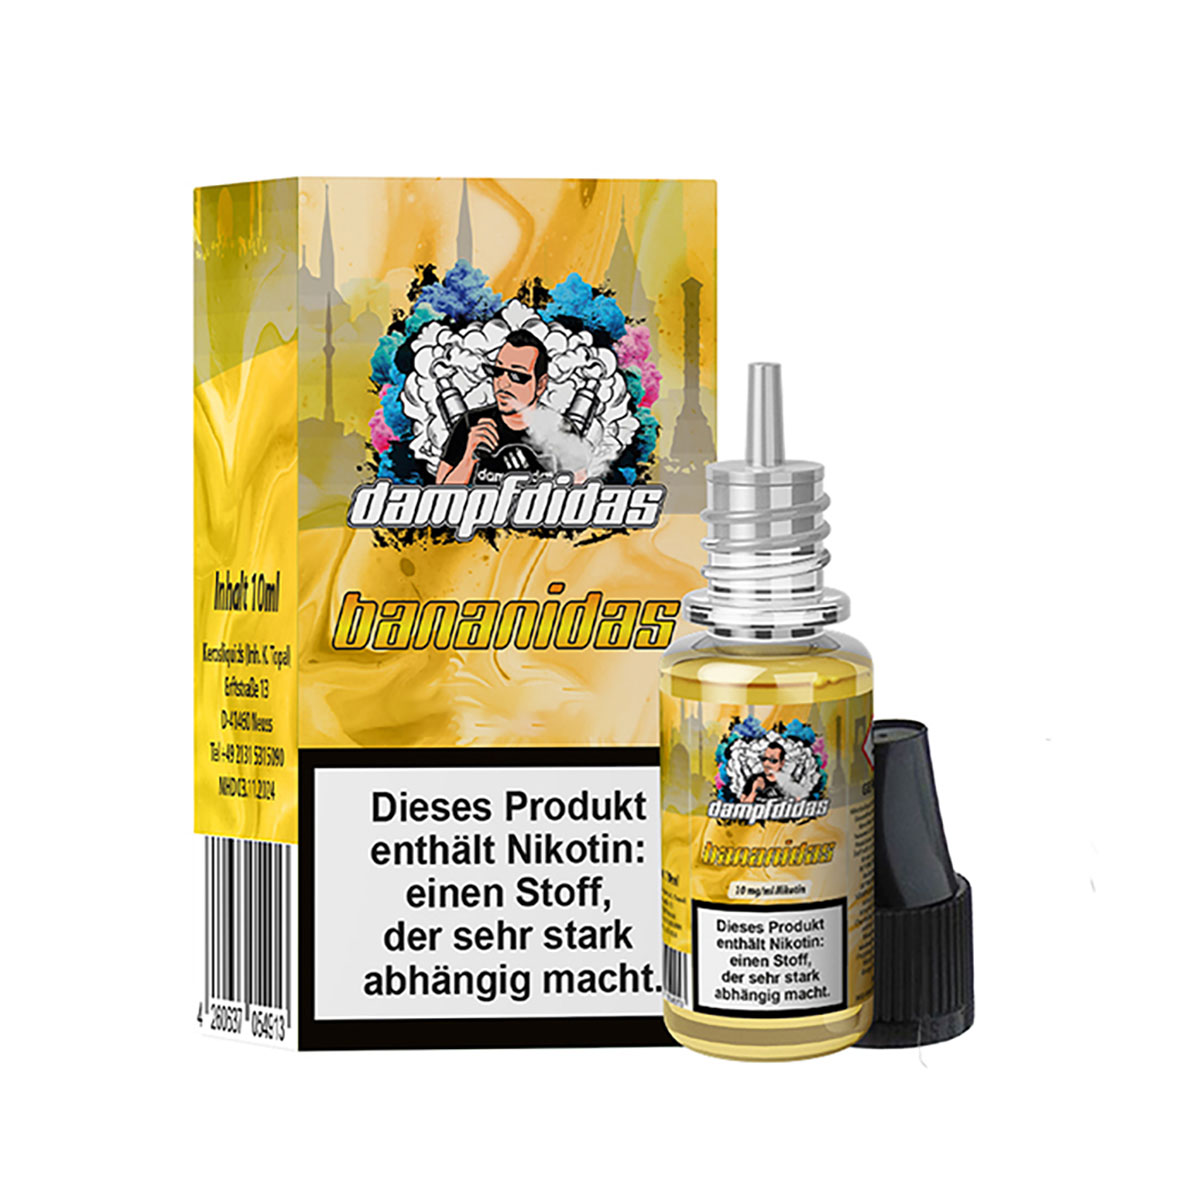 DAMPFDIDAS Bananidas 20mg/ml Liquid 10ml